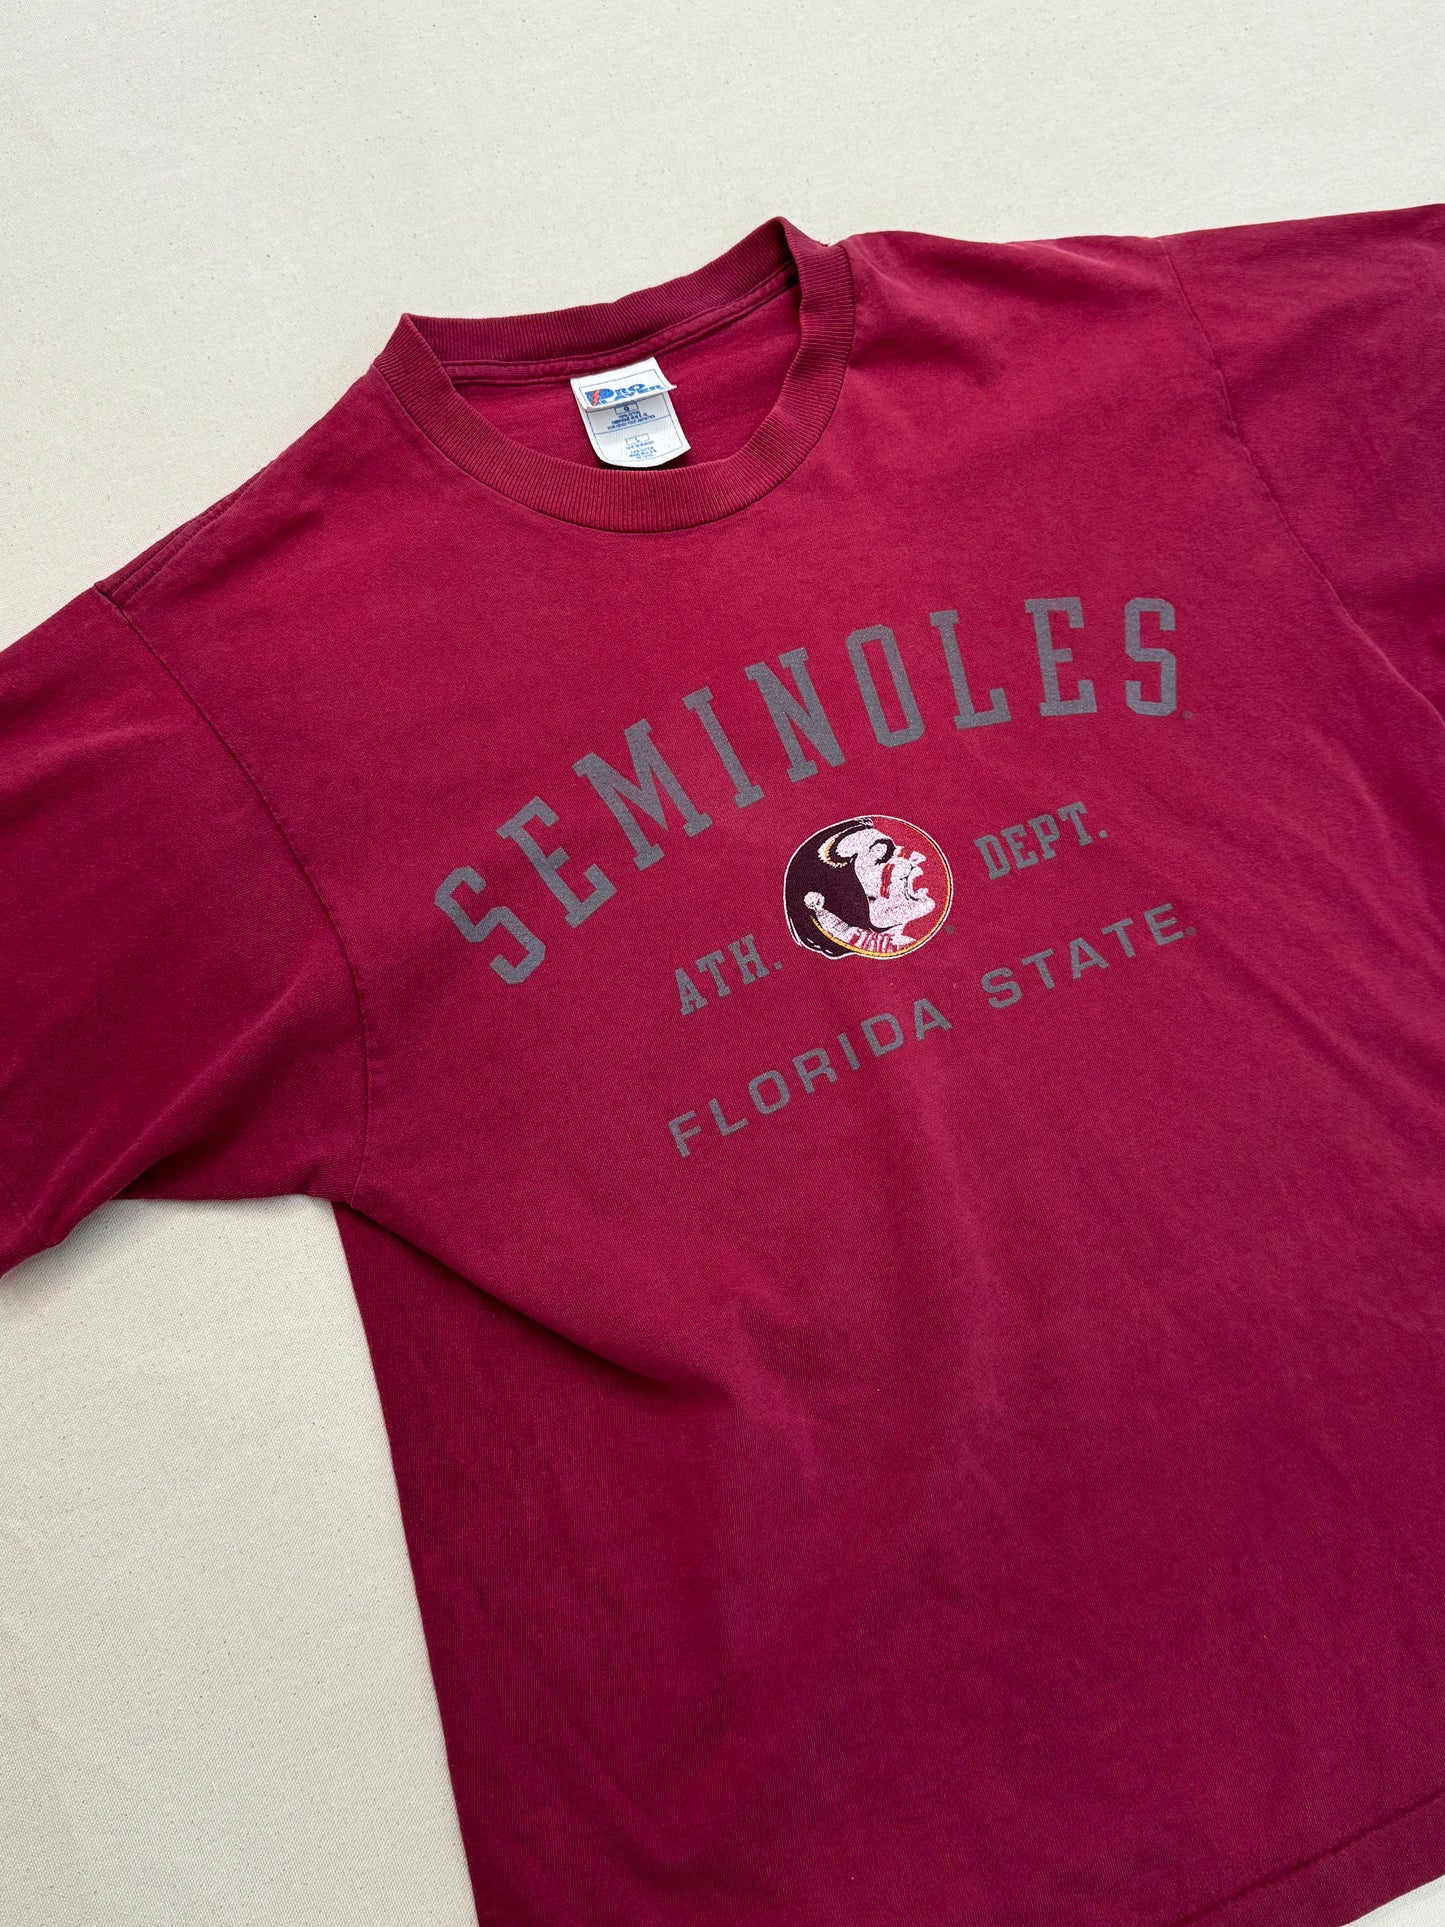 Vintage 90's Seminoles Tee Size L